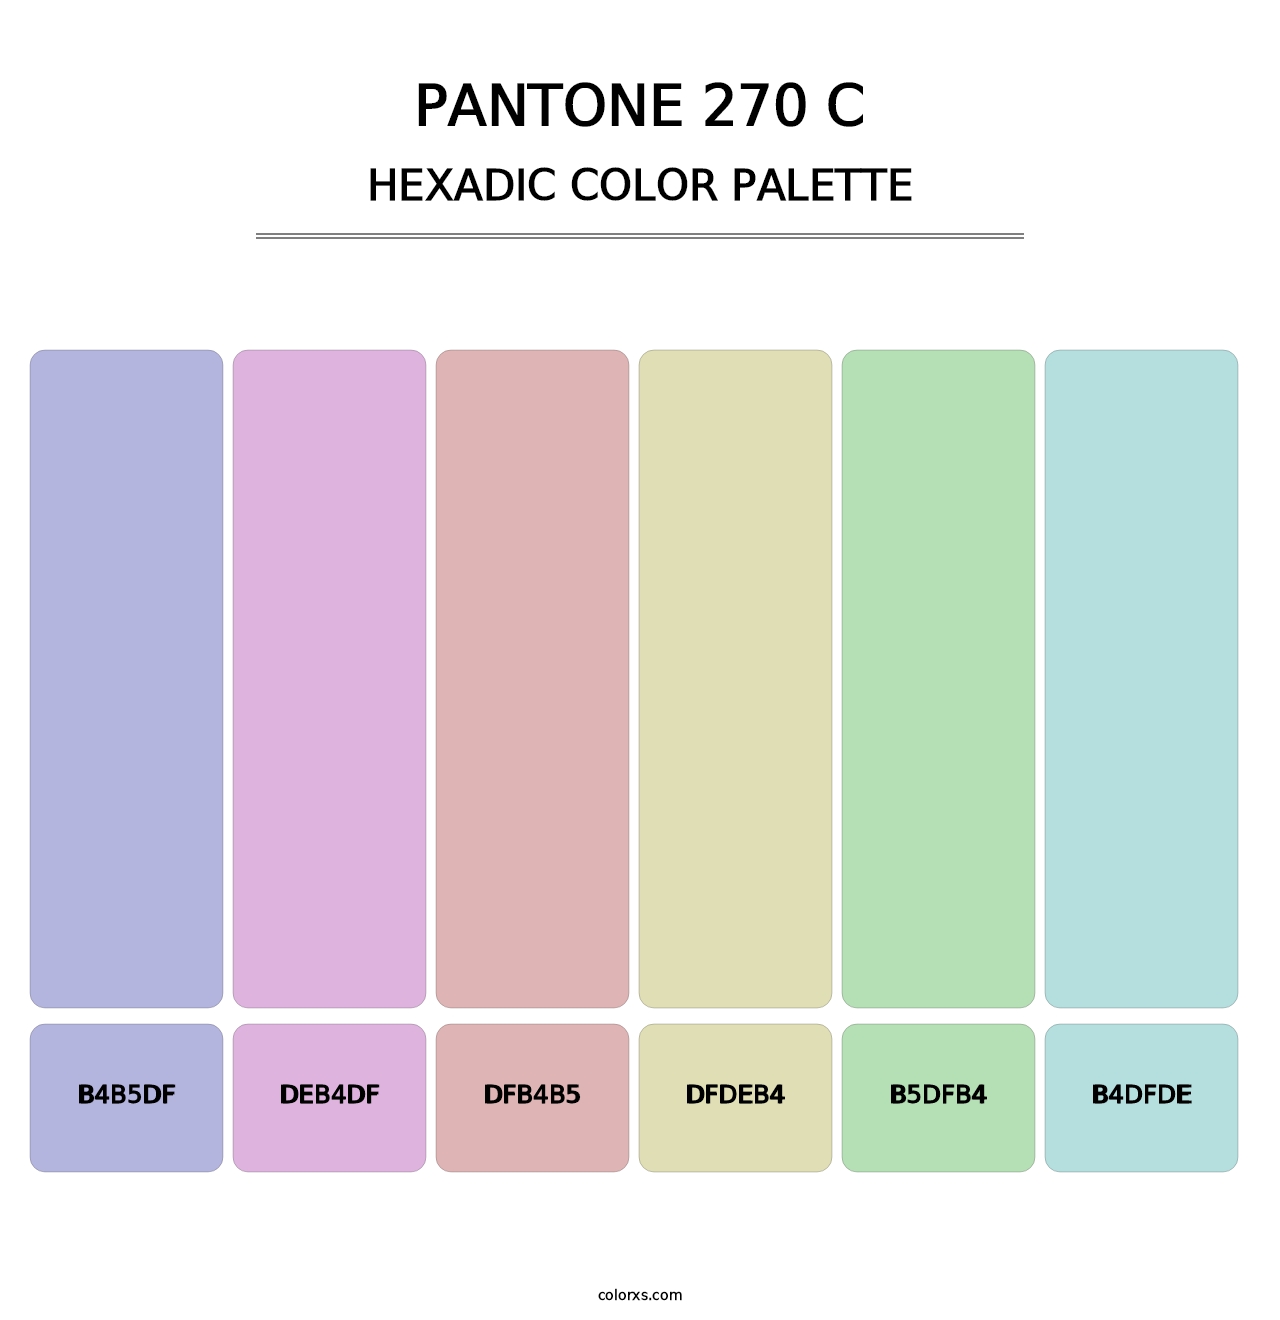 PANTONE 270 C - Hexadic Color Palette